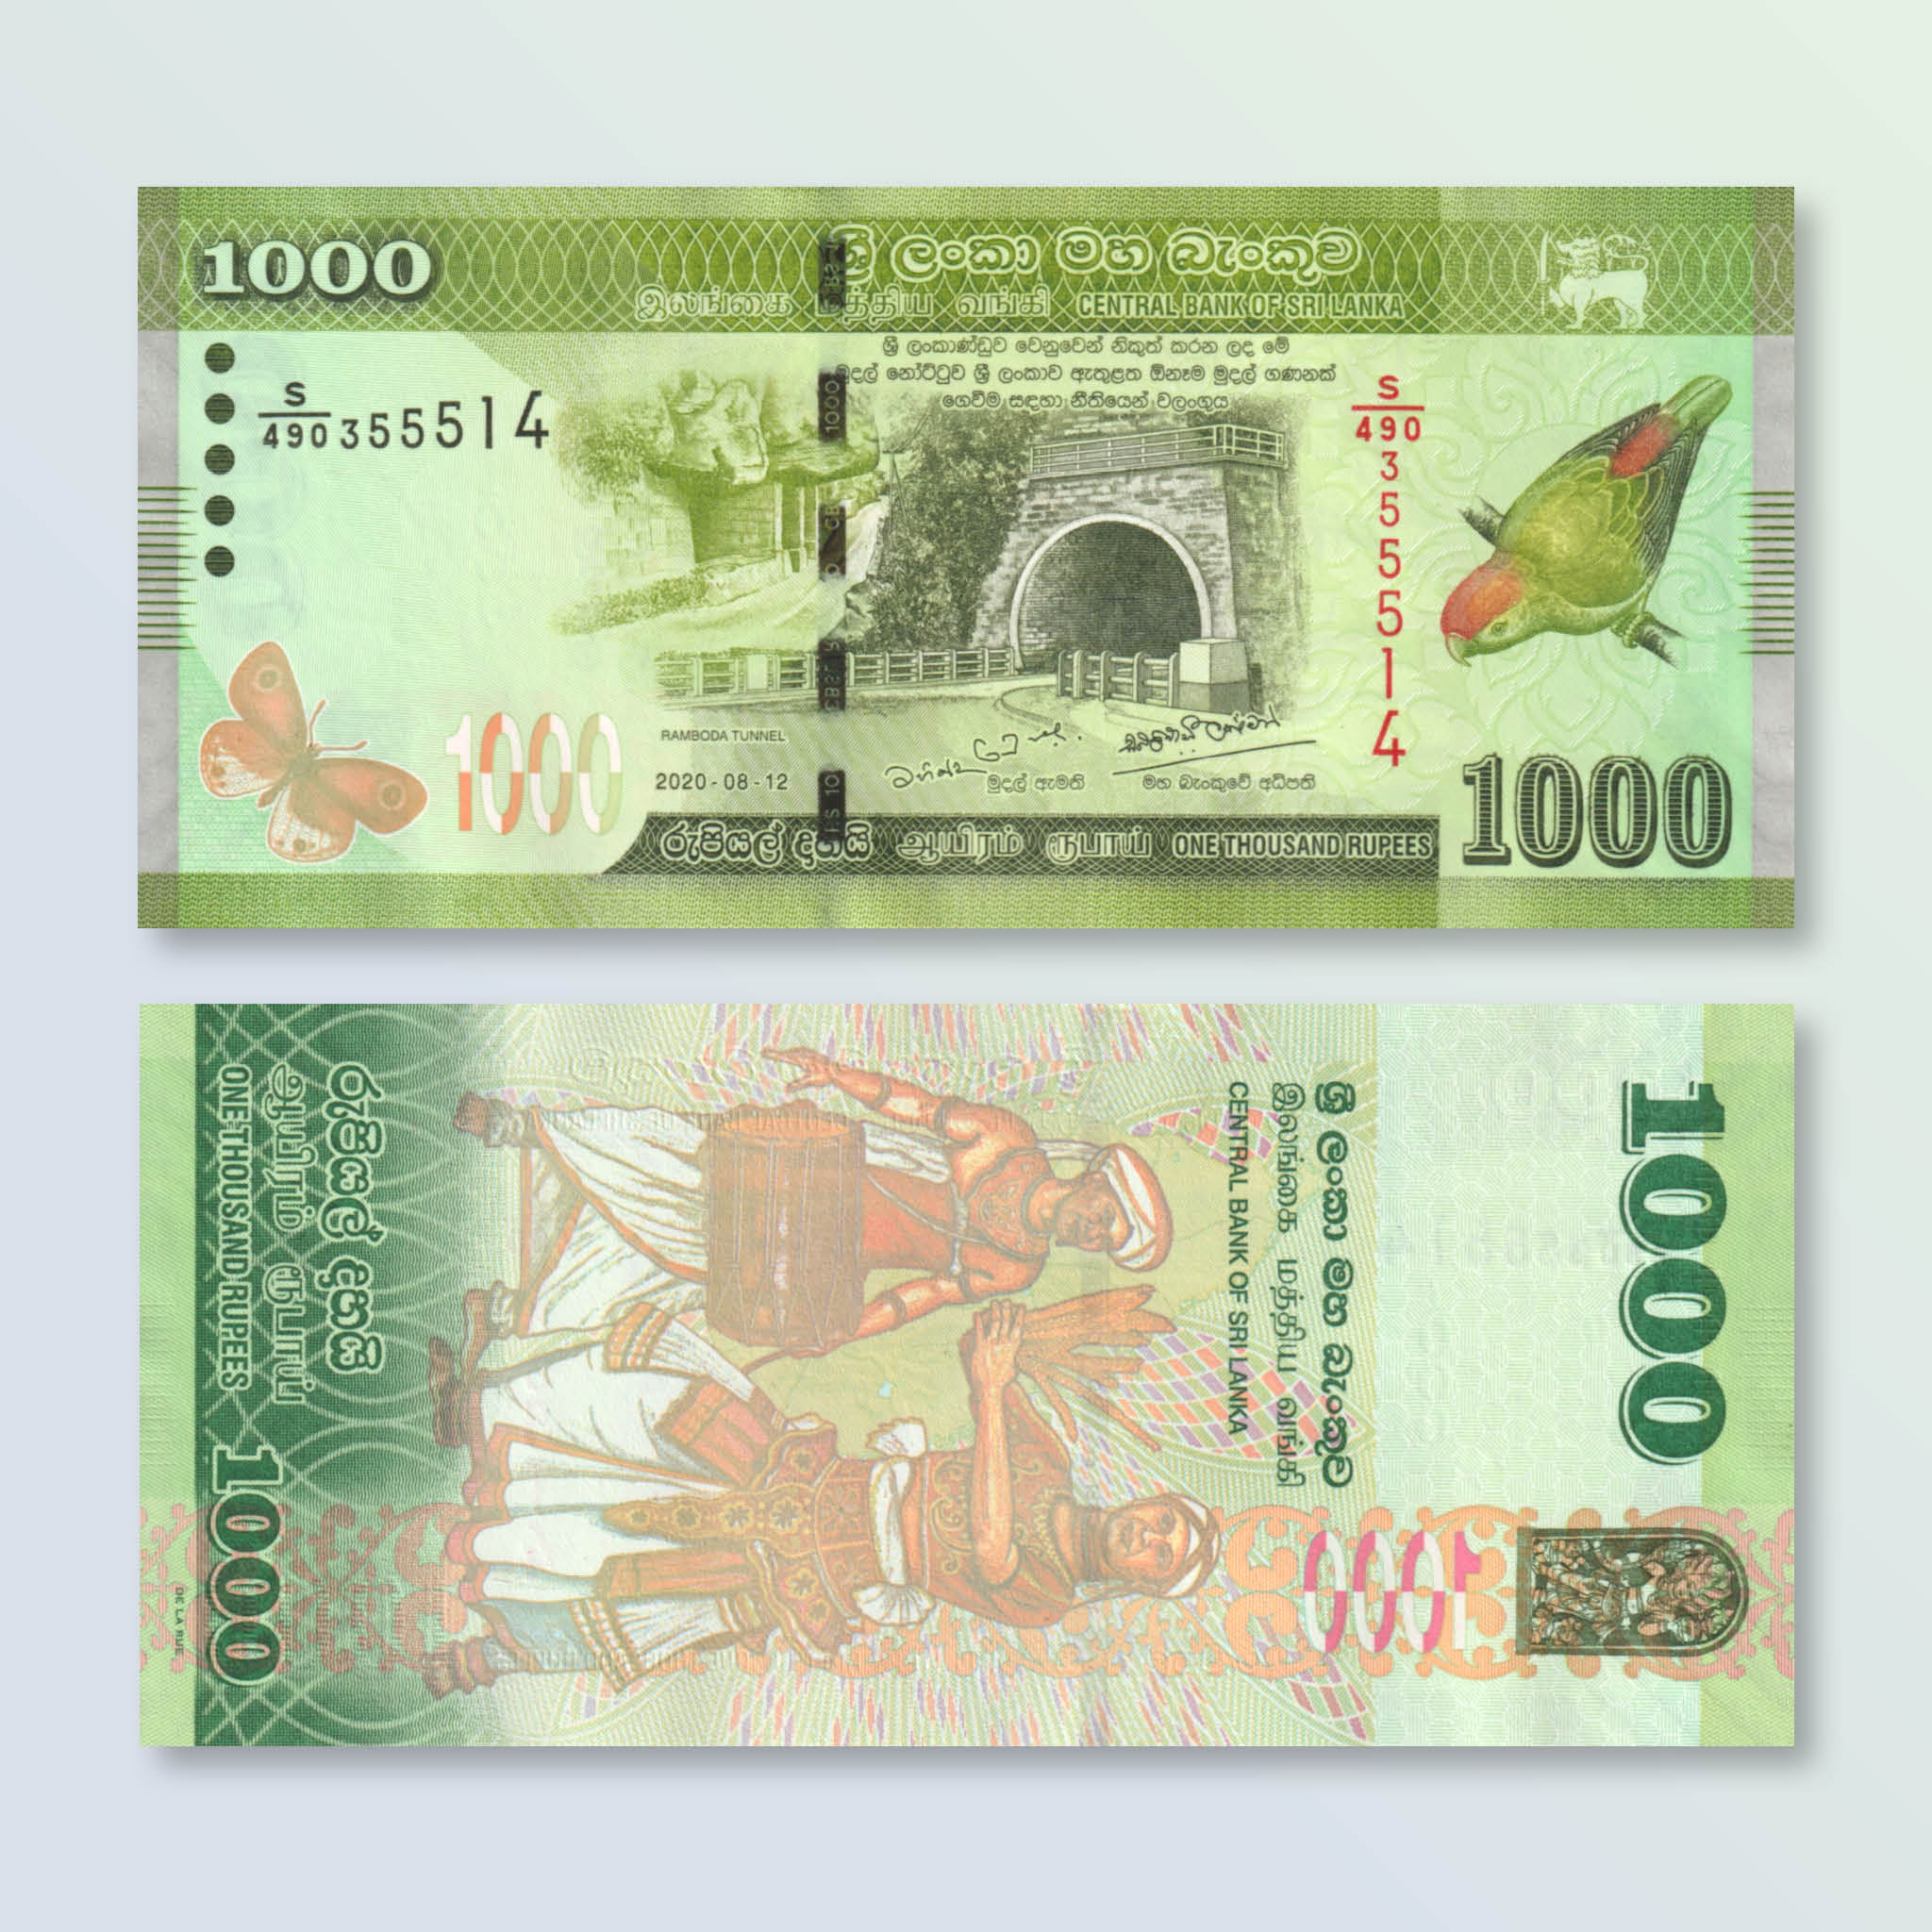 Sri Lanka 1000 Rupees, 2016, B127c, P127d, UNC - Robert's World Money - World Banknotes